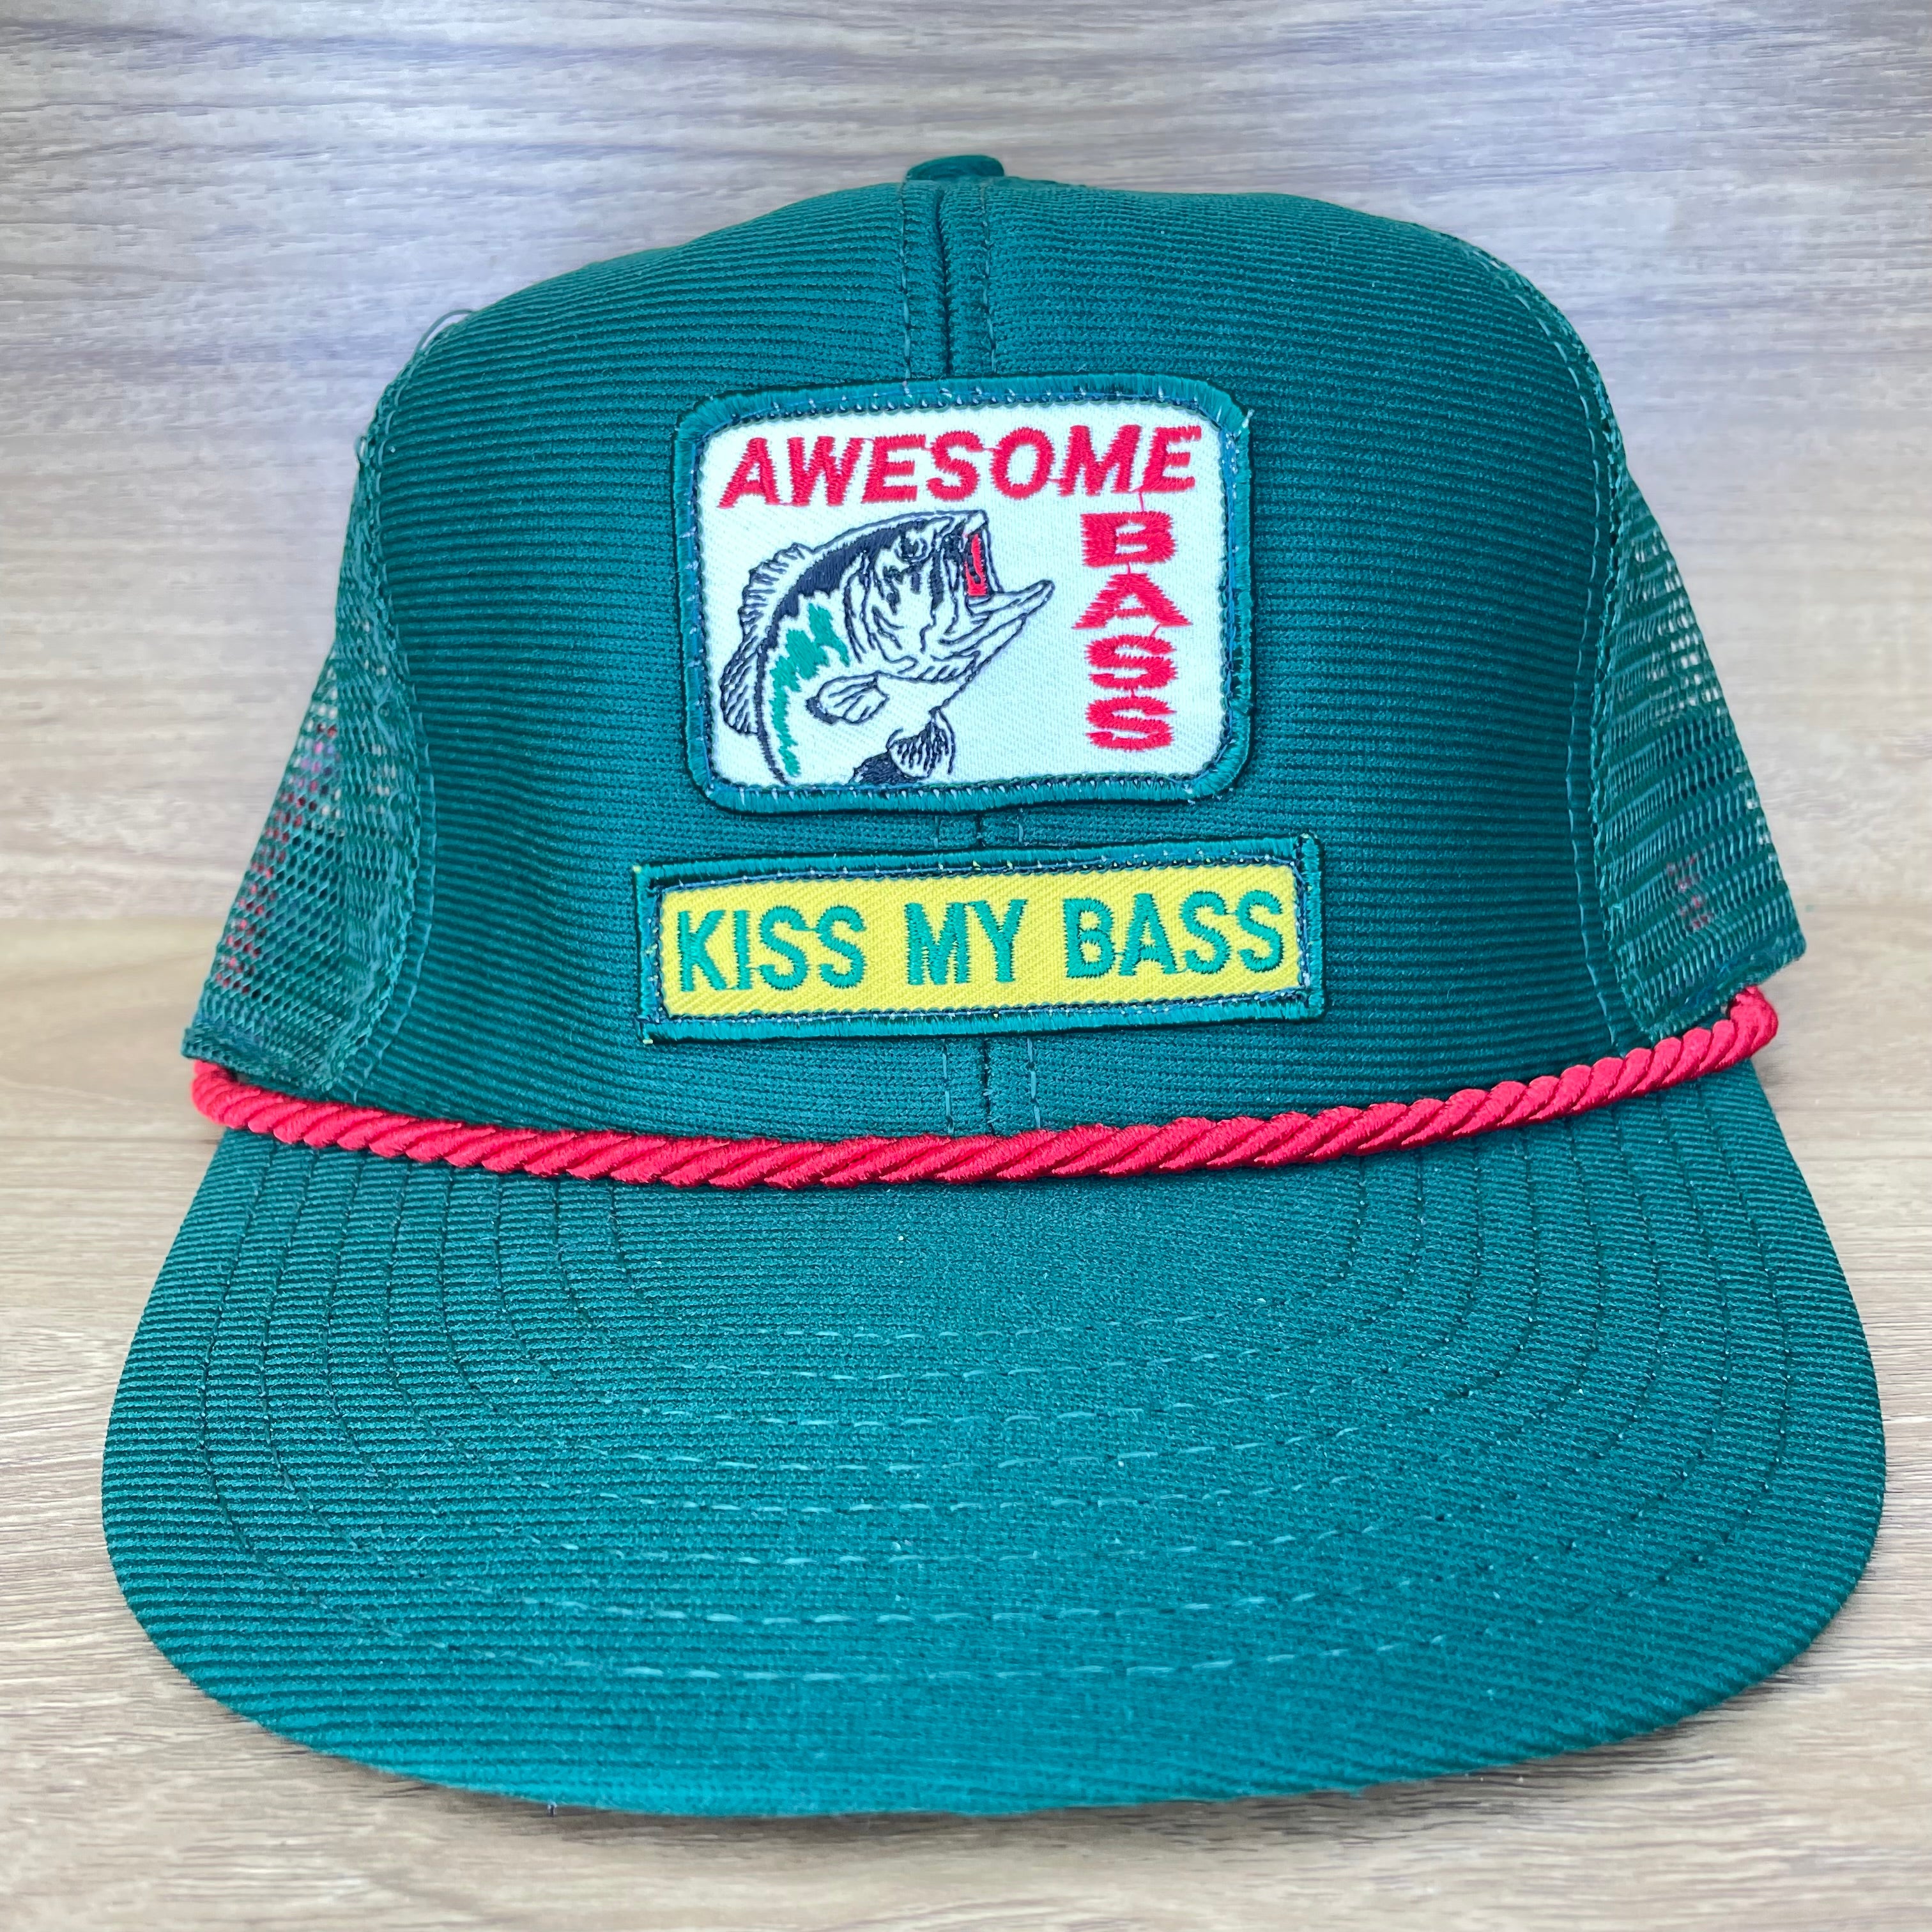 Bass Pro Shops white SnapBack Rope Trucker Fishing Logo Mesh Cap Hat